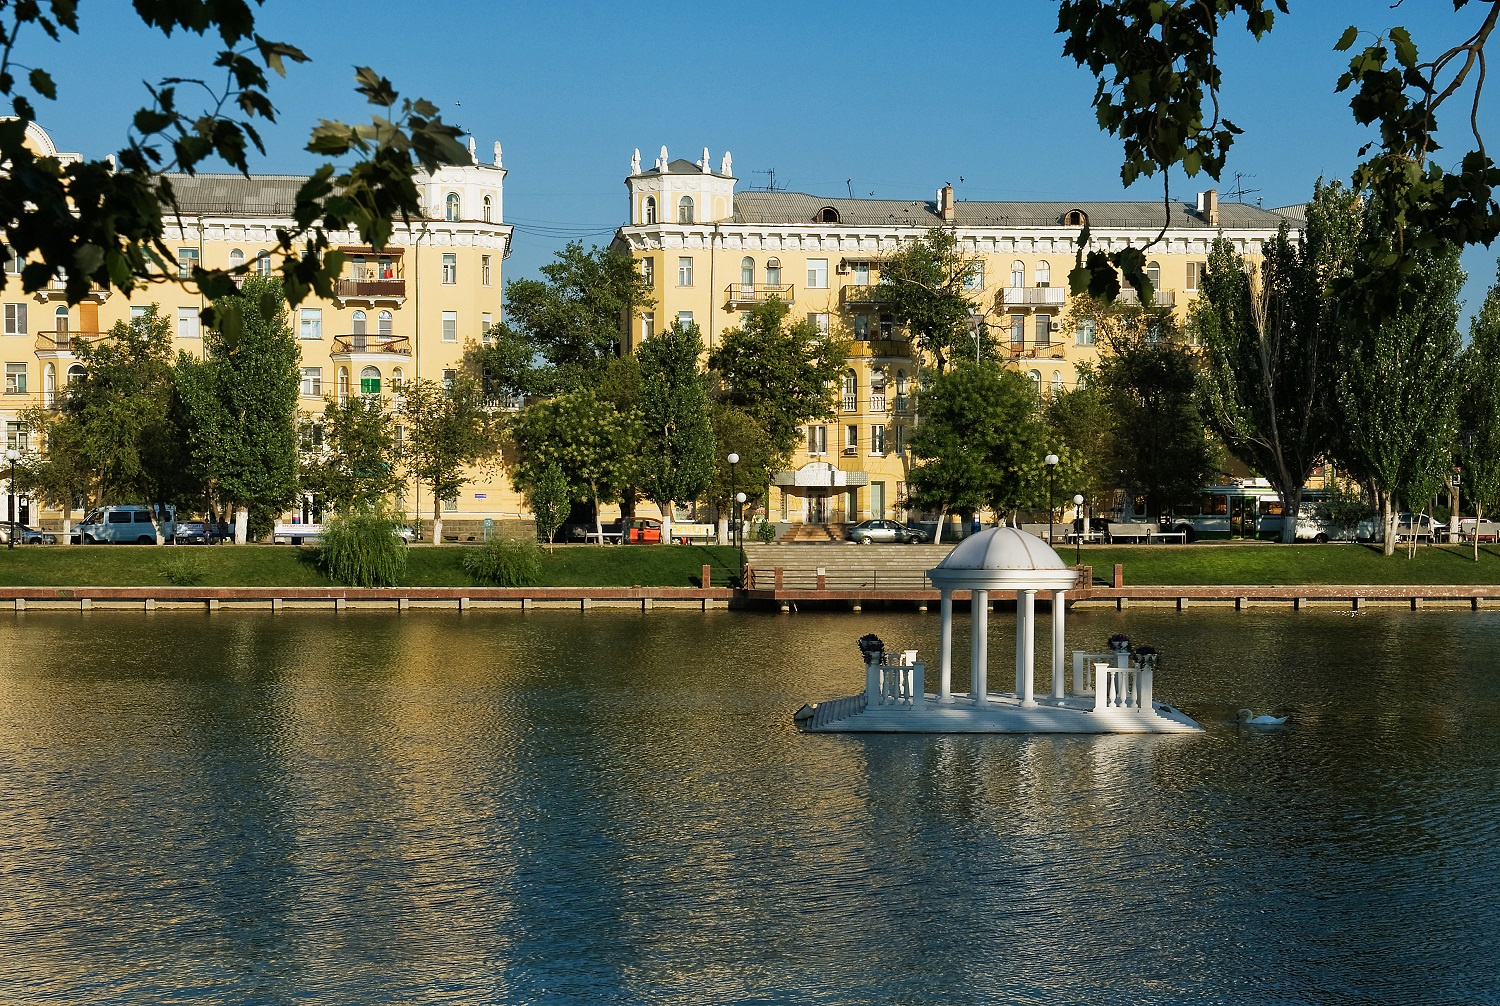 Лебединое озеро — самое
романтичное место Астрахани